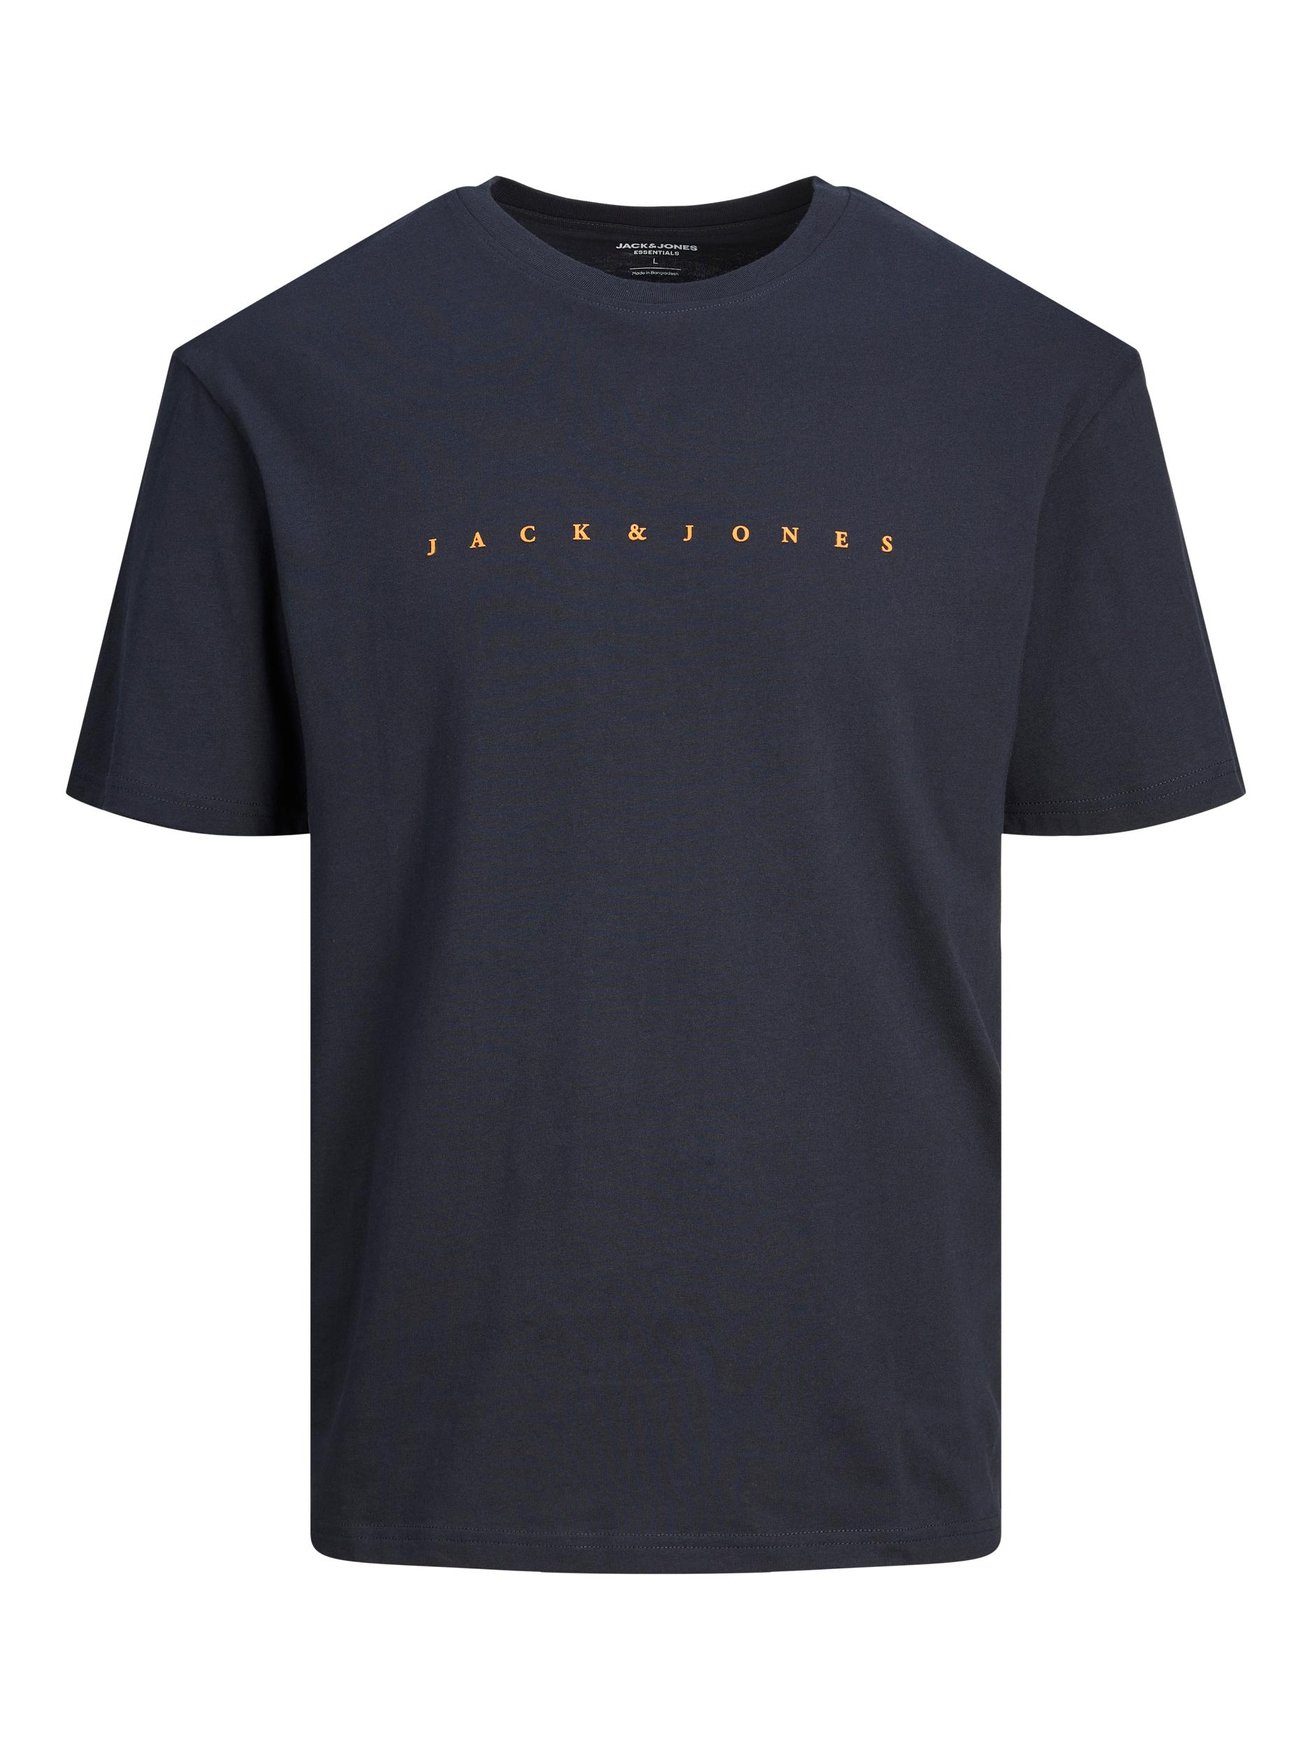 Jack & Jones T-Shirt T-Shirt Dunkelblau 6550 Size Plus Logo JJESTAR Kurzarm Shirt Übergröße in